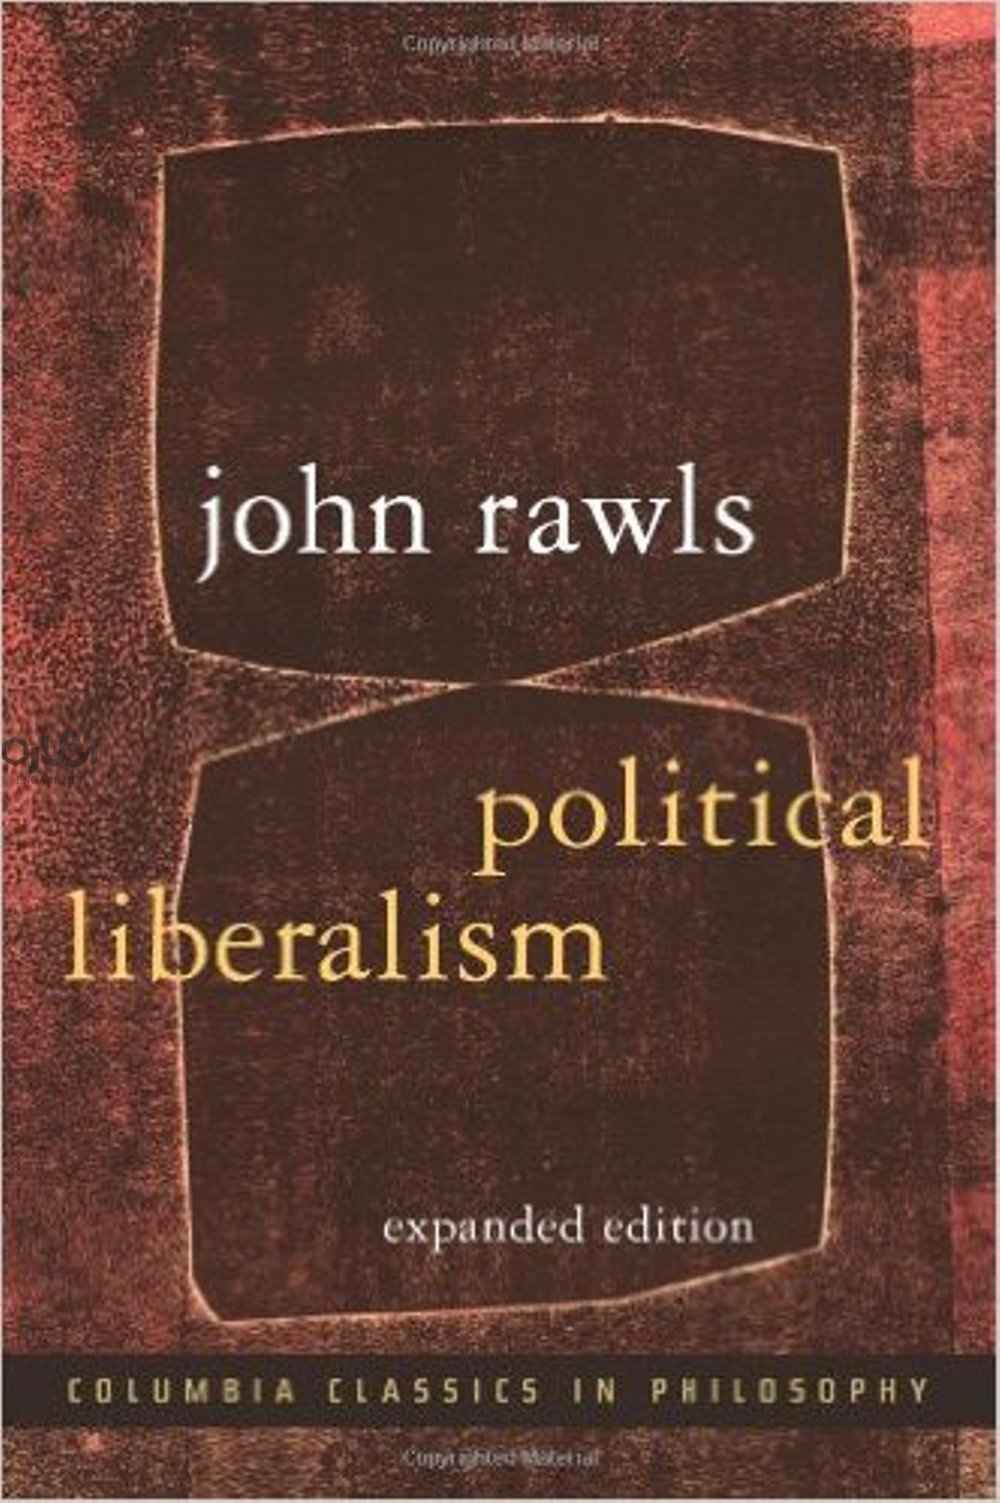 political liberalism john rawls 1 - لیبرالیسم سیاسی - لیبرالیسم هابزی, لیبرالیسم سیاسی, کمال گرایی, فلسفه کانت, فلسفه سیاسی, فایده‌گرایی, عدالت, دموکراسی, جان رالز, جامعه‌ی دموکراتیک, آزادی وجدان, political liberalism